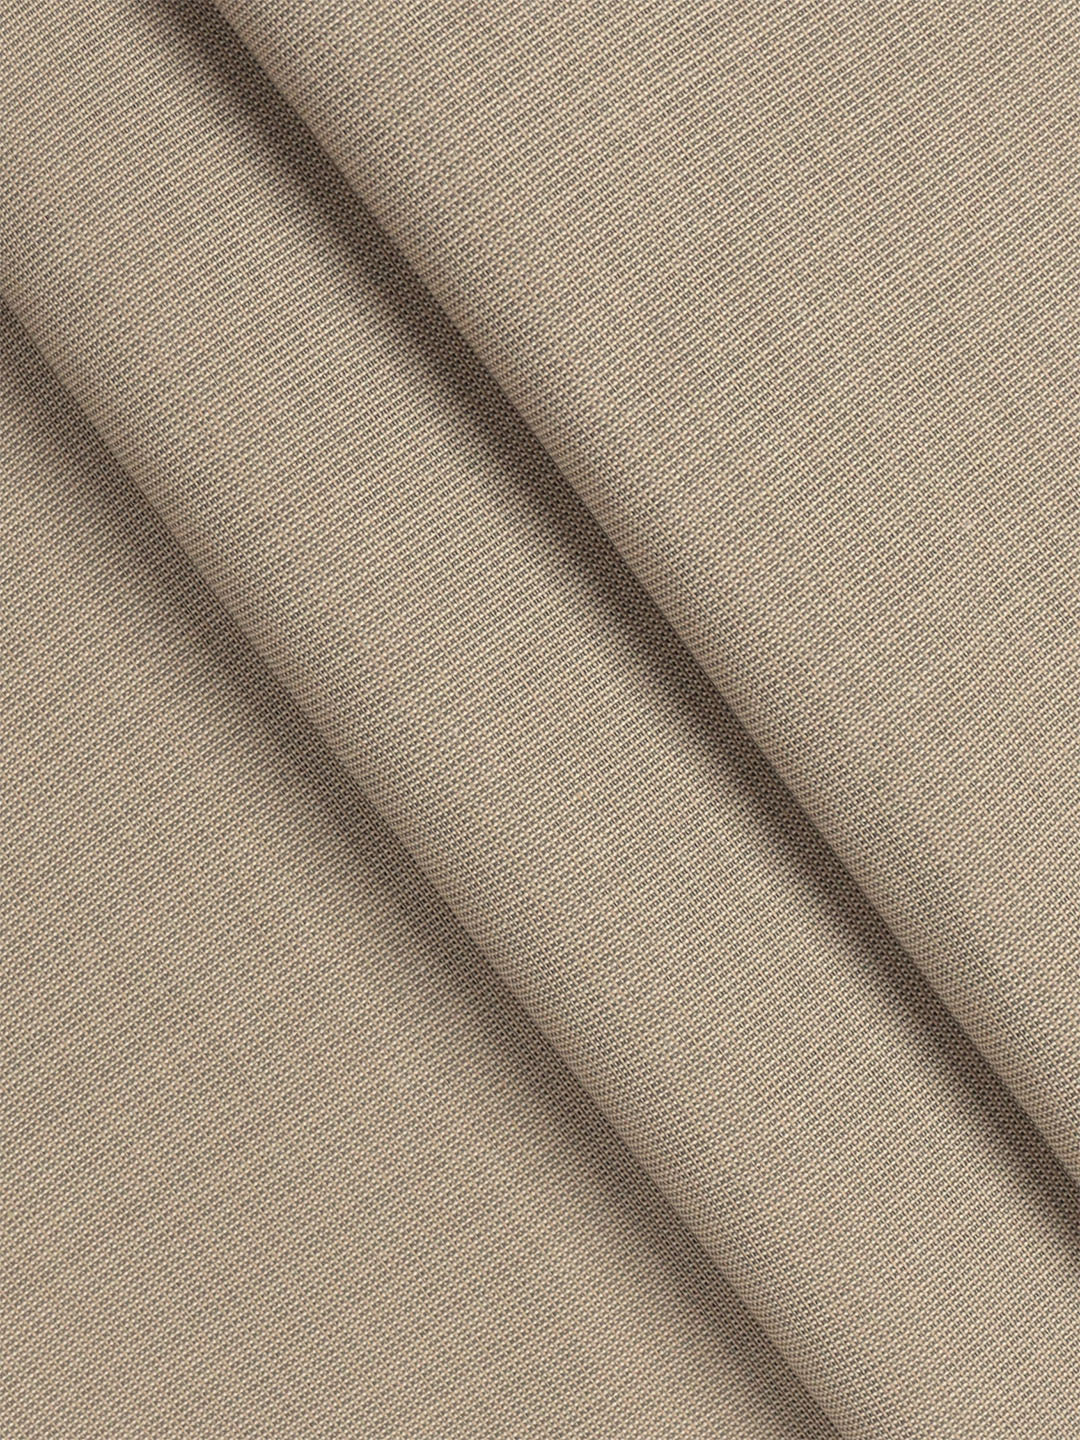 Cotton Fancy Brown Colour Plain Suiting Fabric All Days